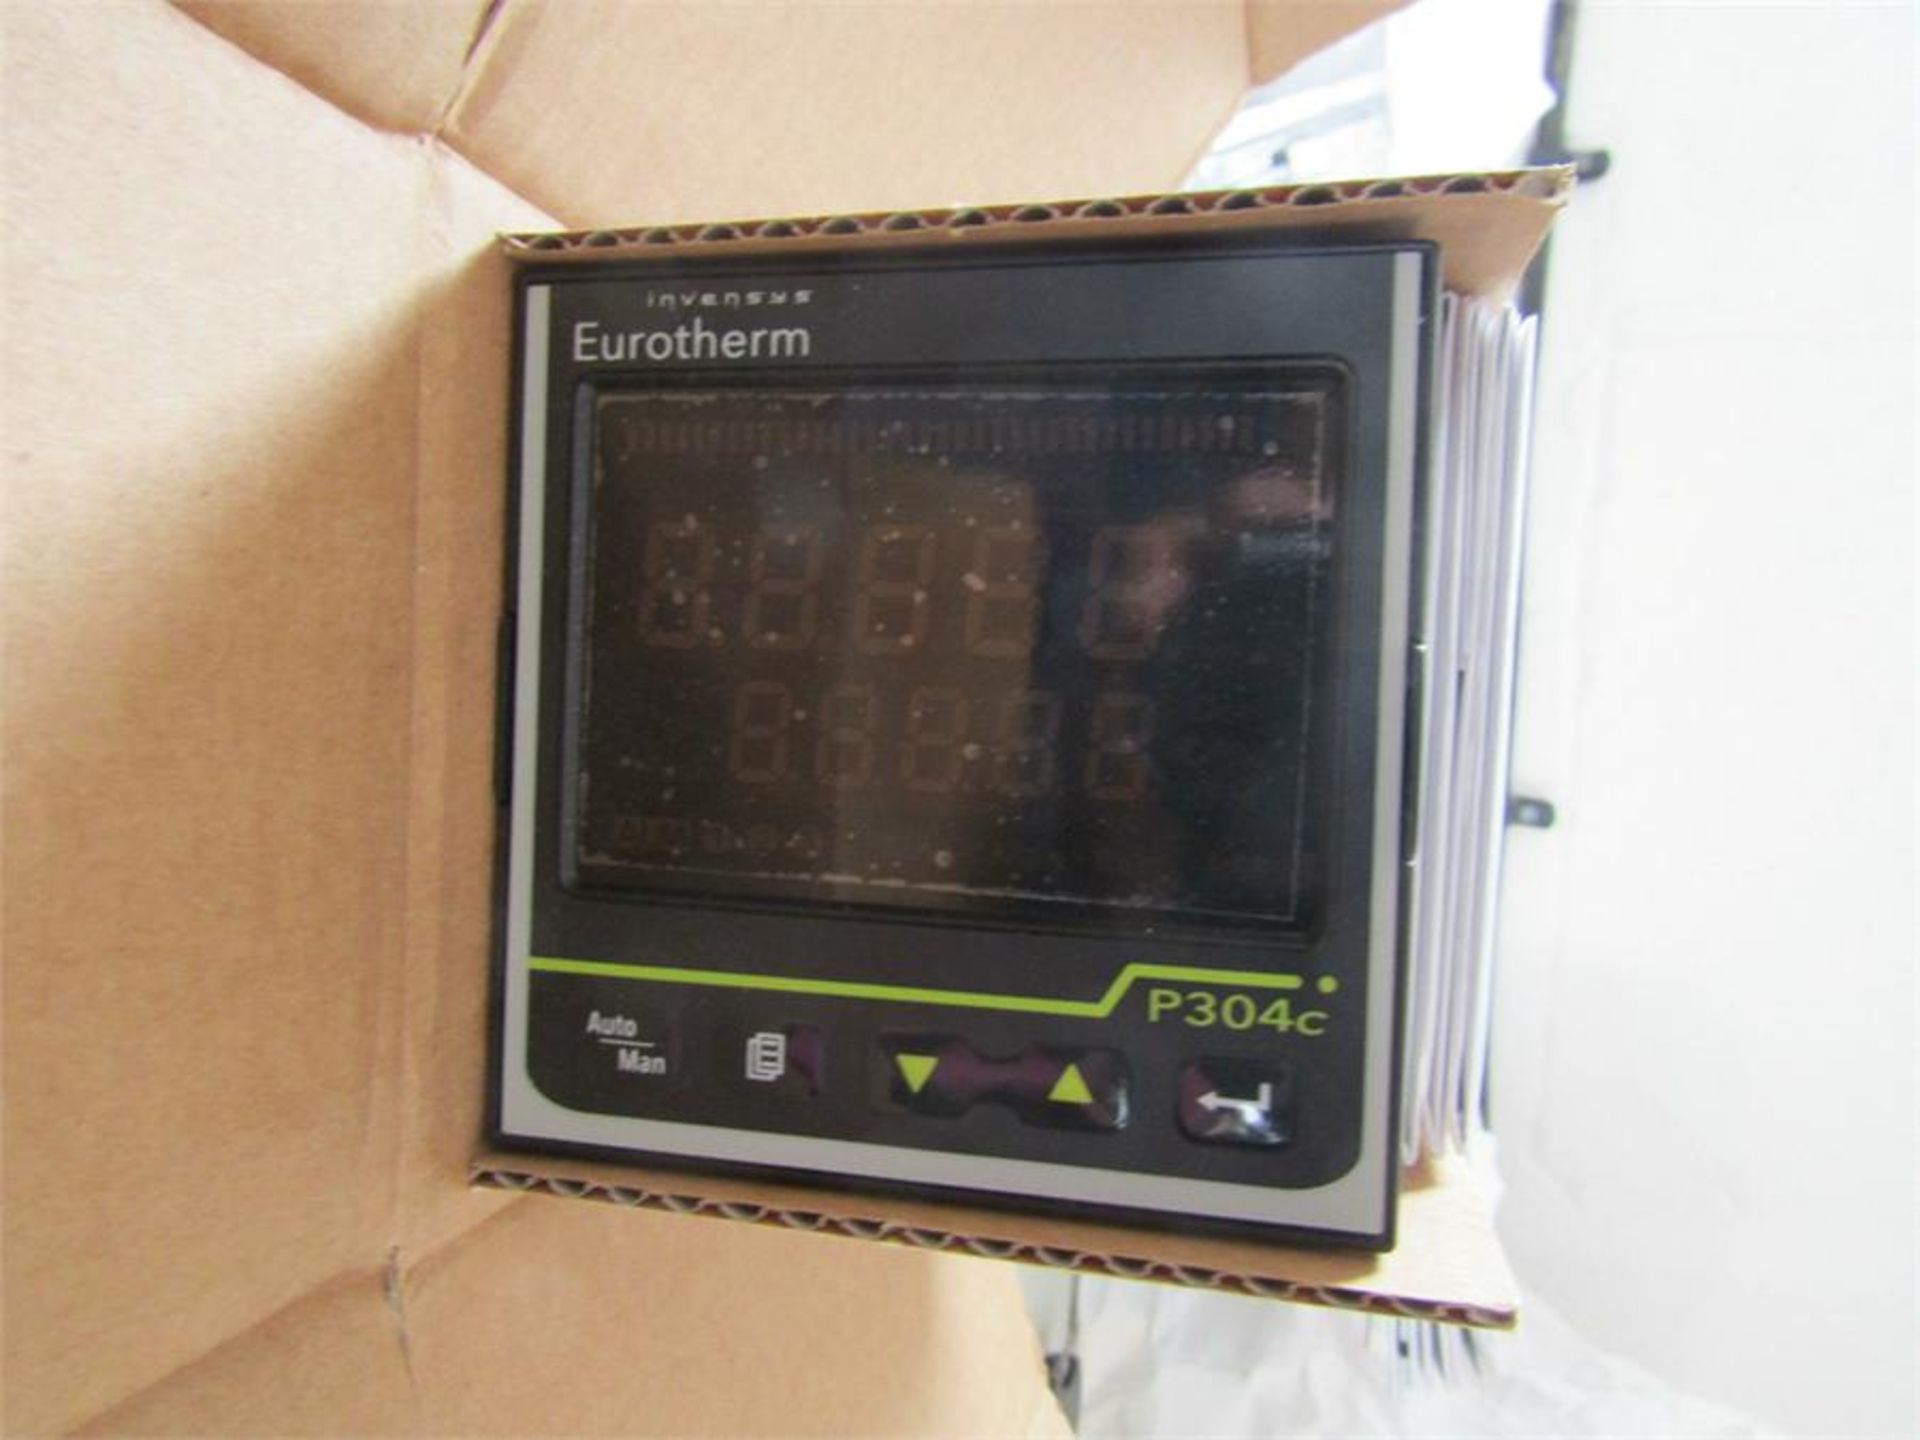 Eurotherm P304c Melt Pressure Controller SP